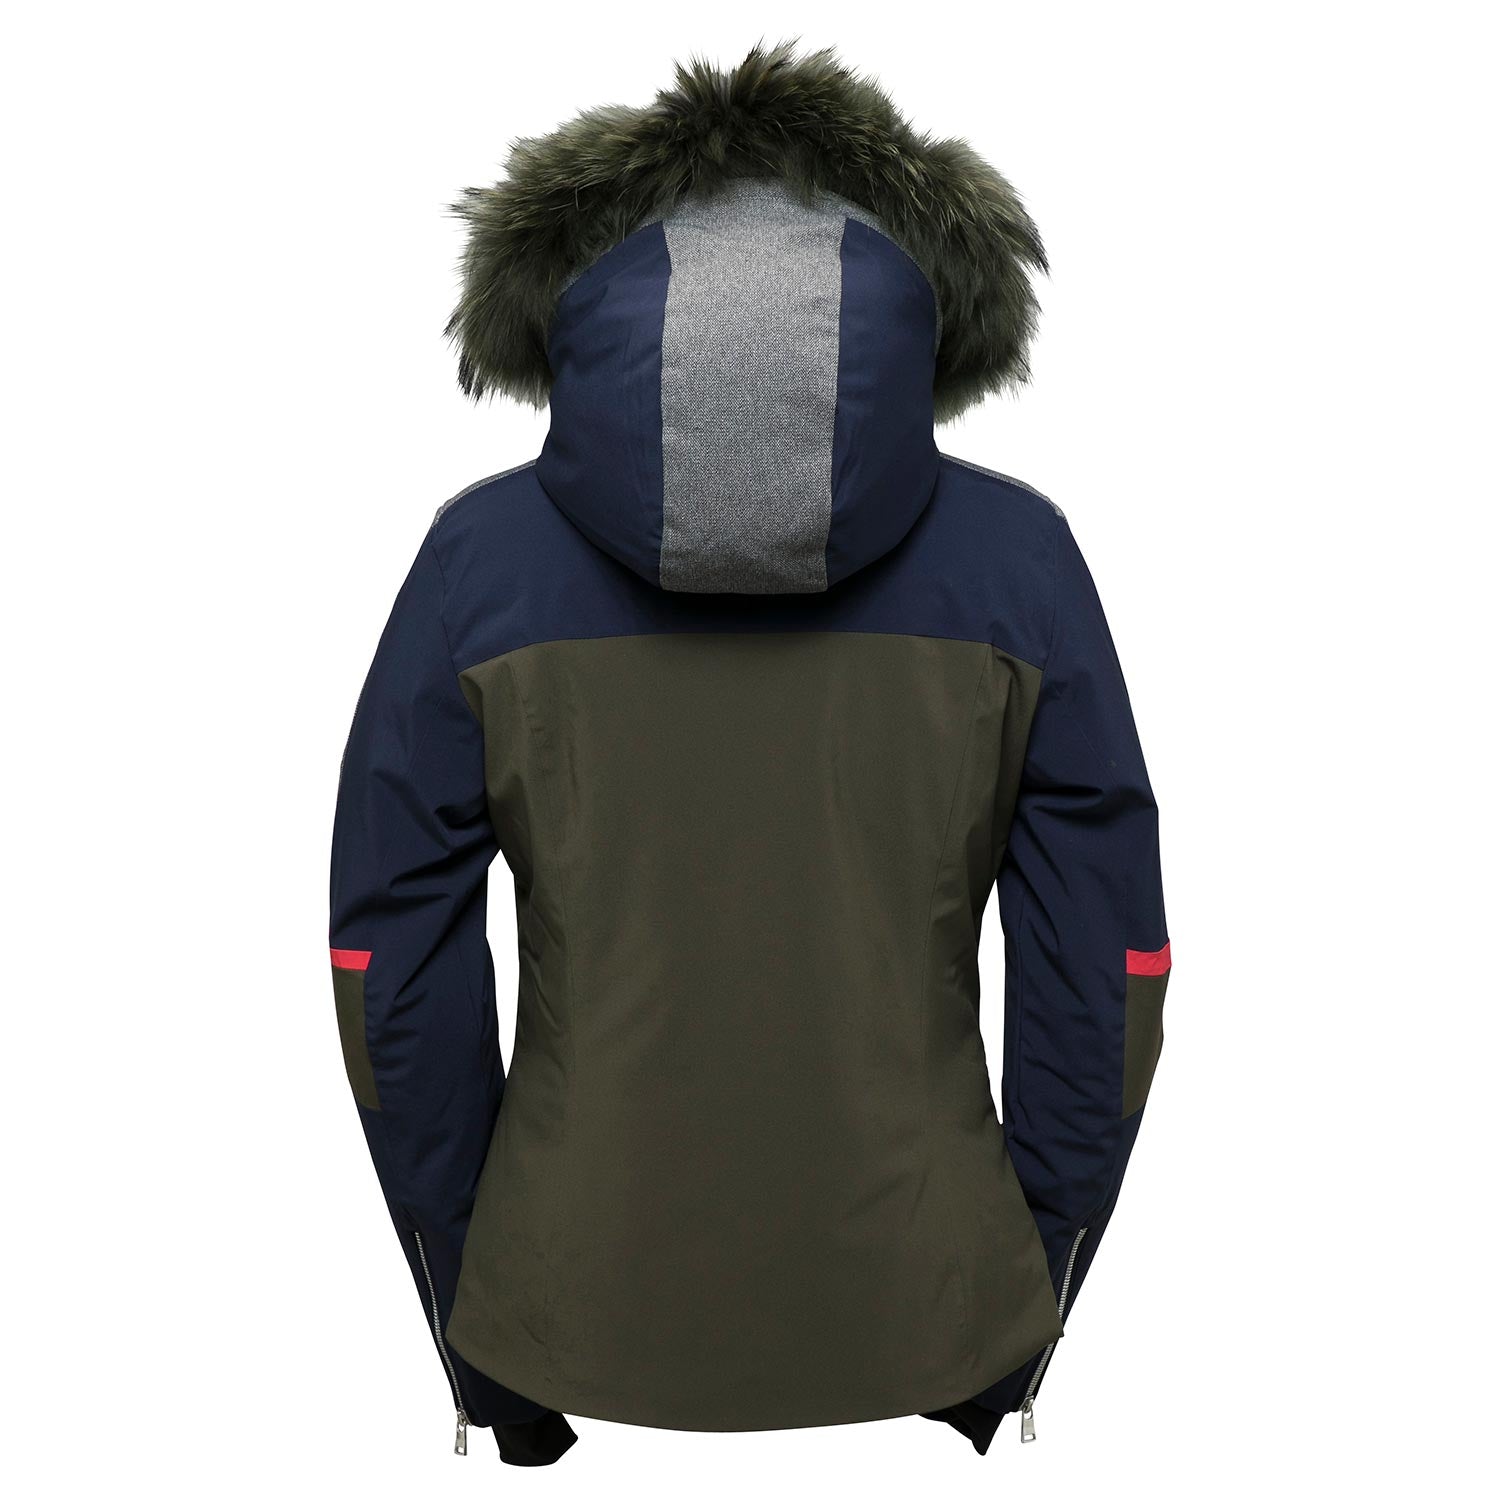 Phenix Amanda Hybrid Fur Ski Jacket 2019 - Olive